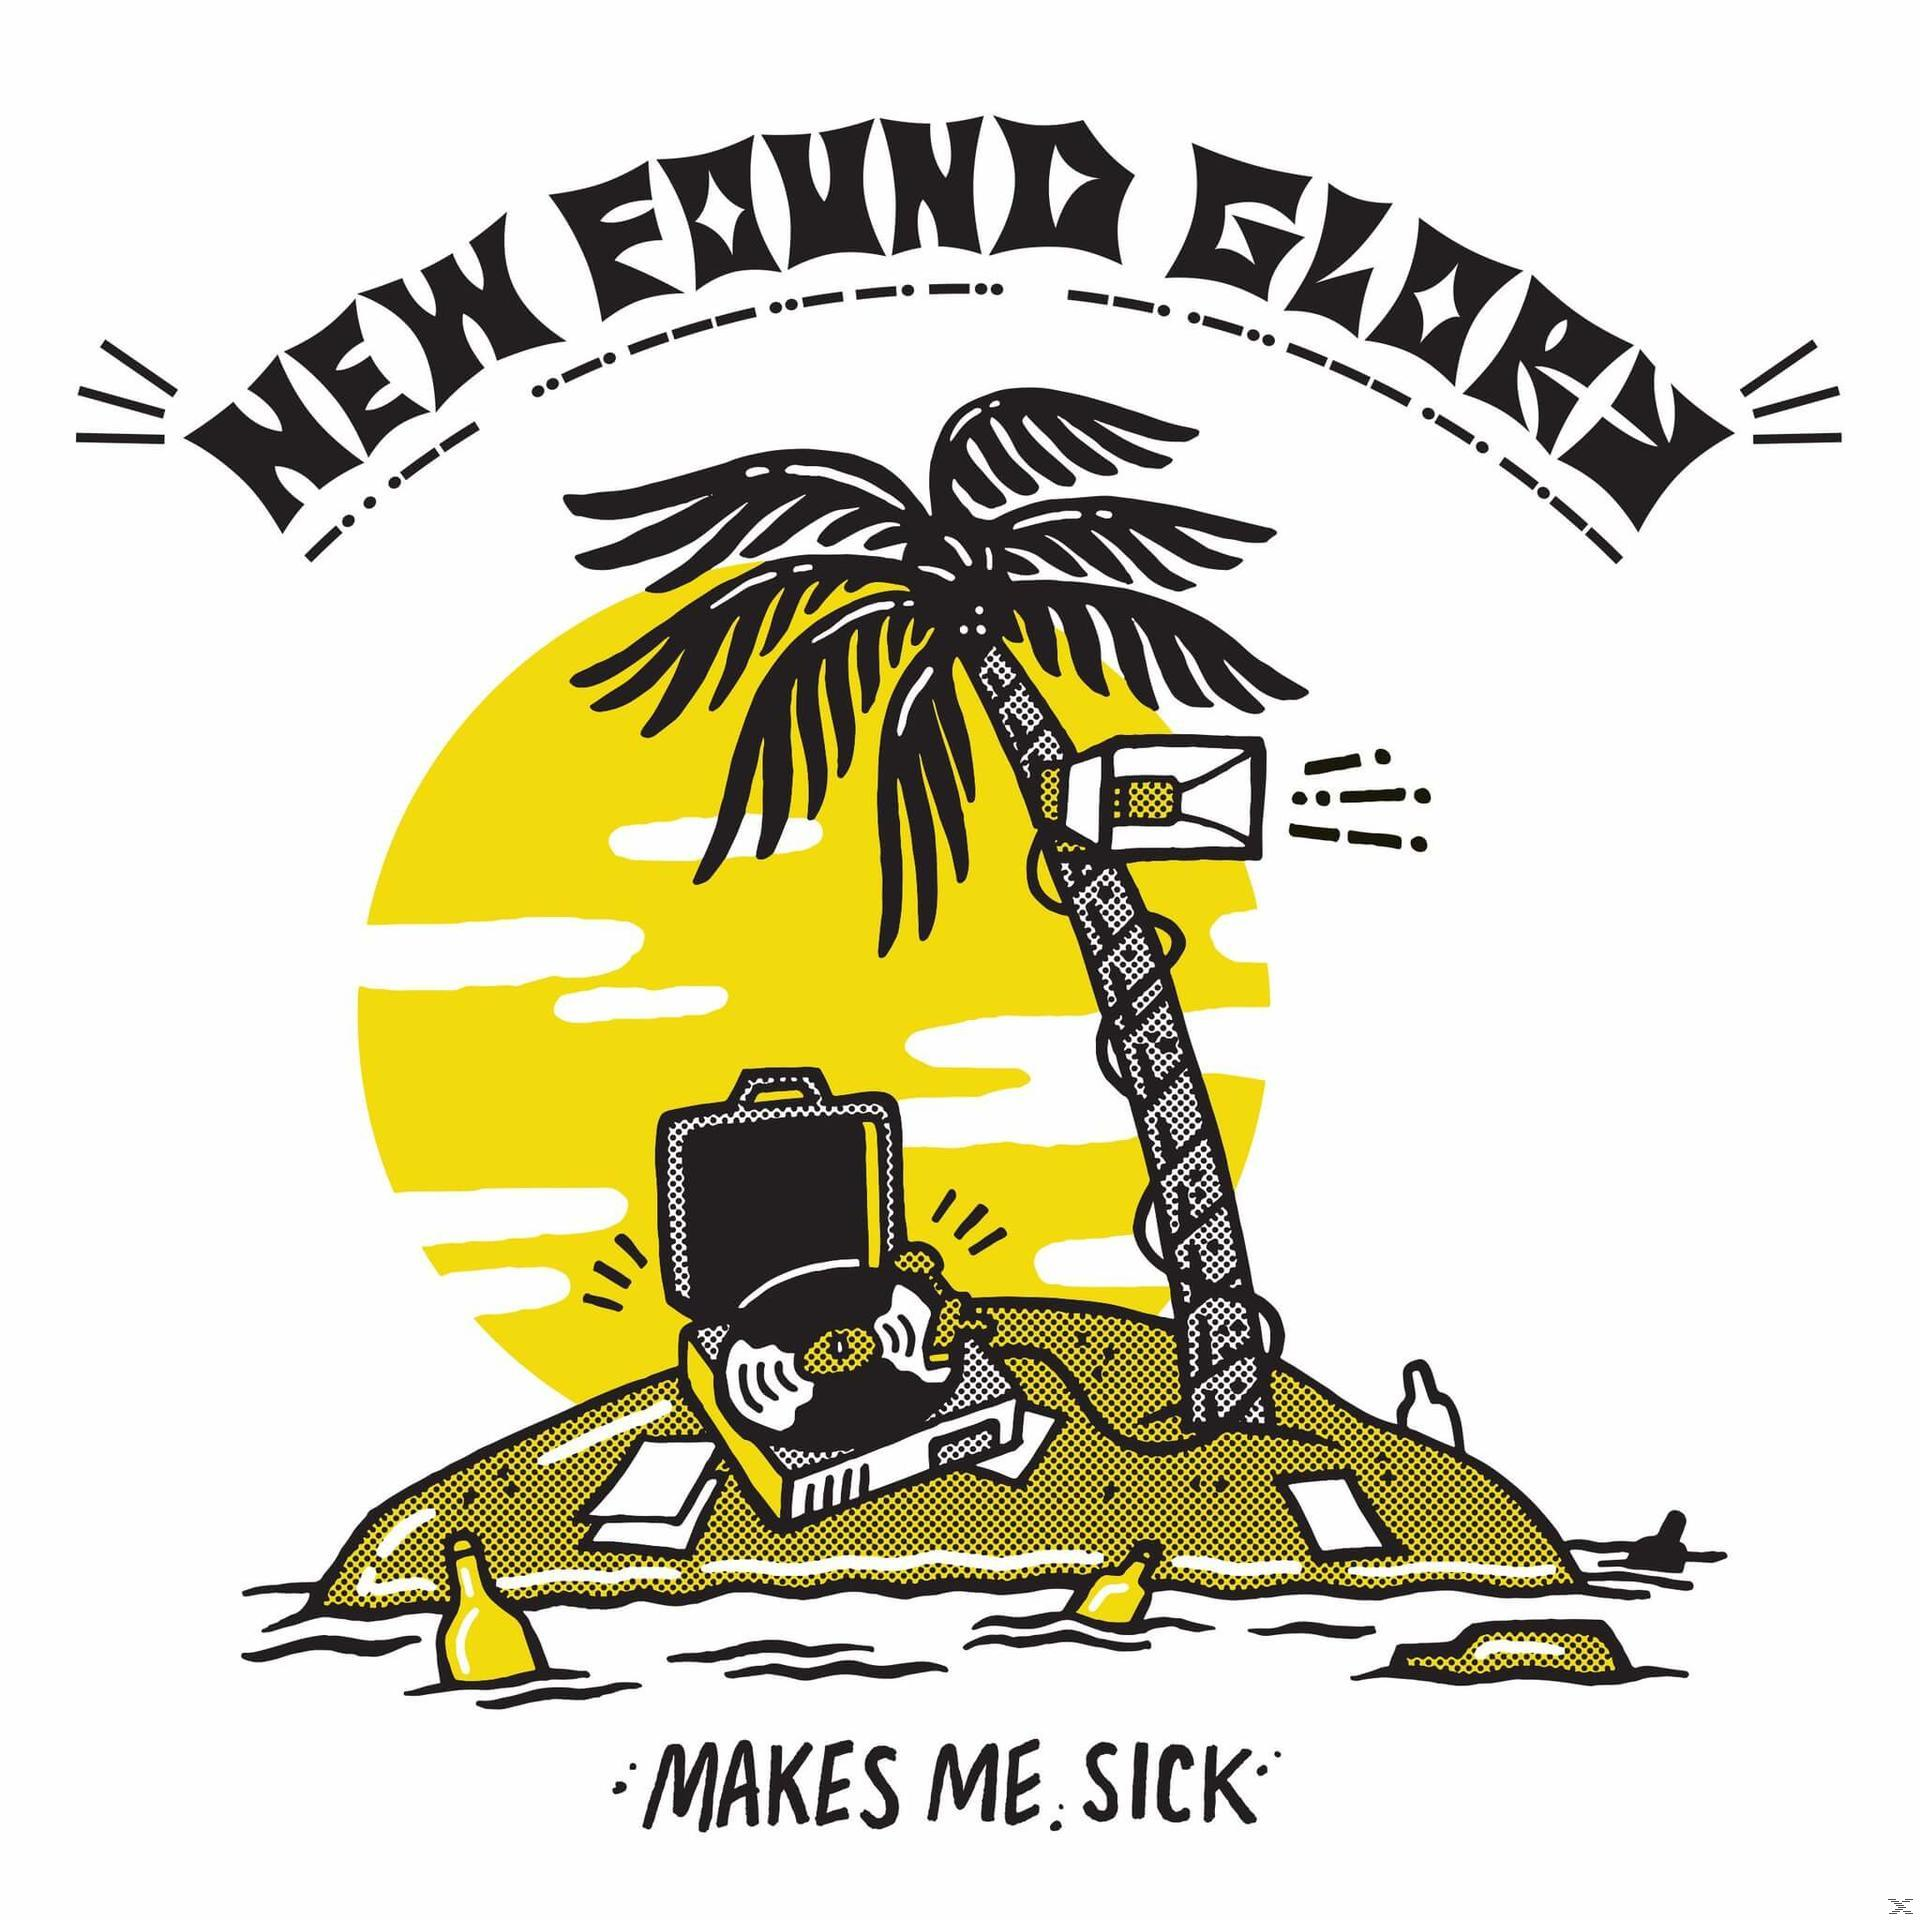 New Found Glory - Makes (CD) Me Sick 